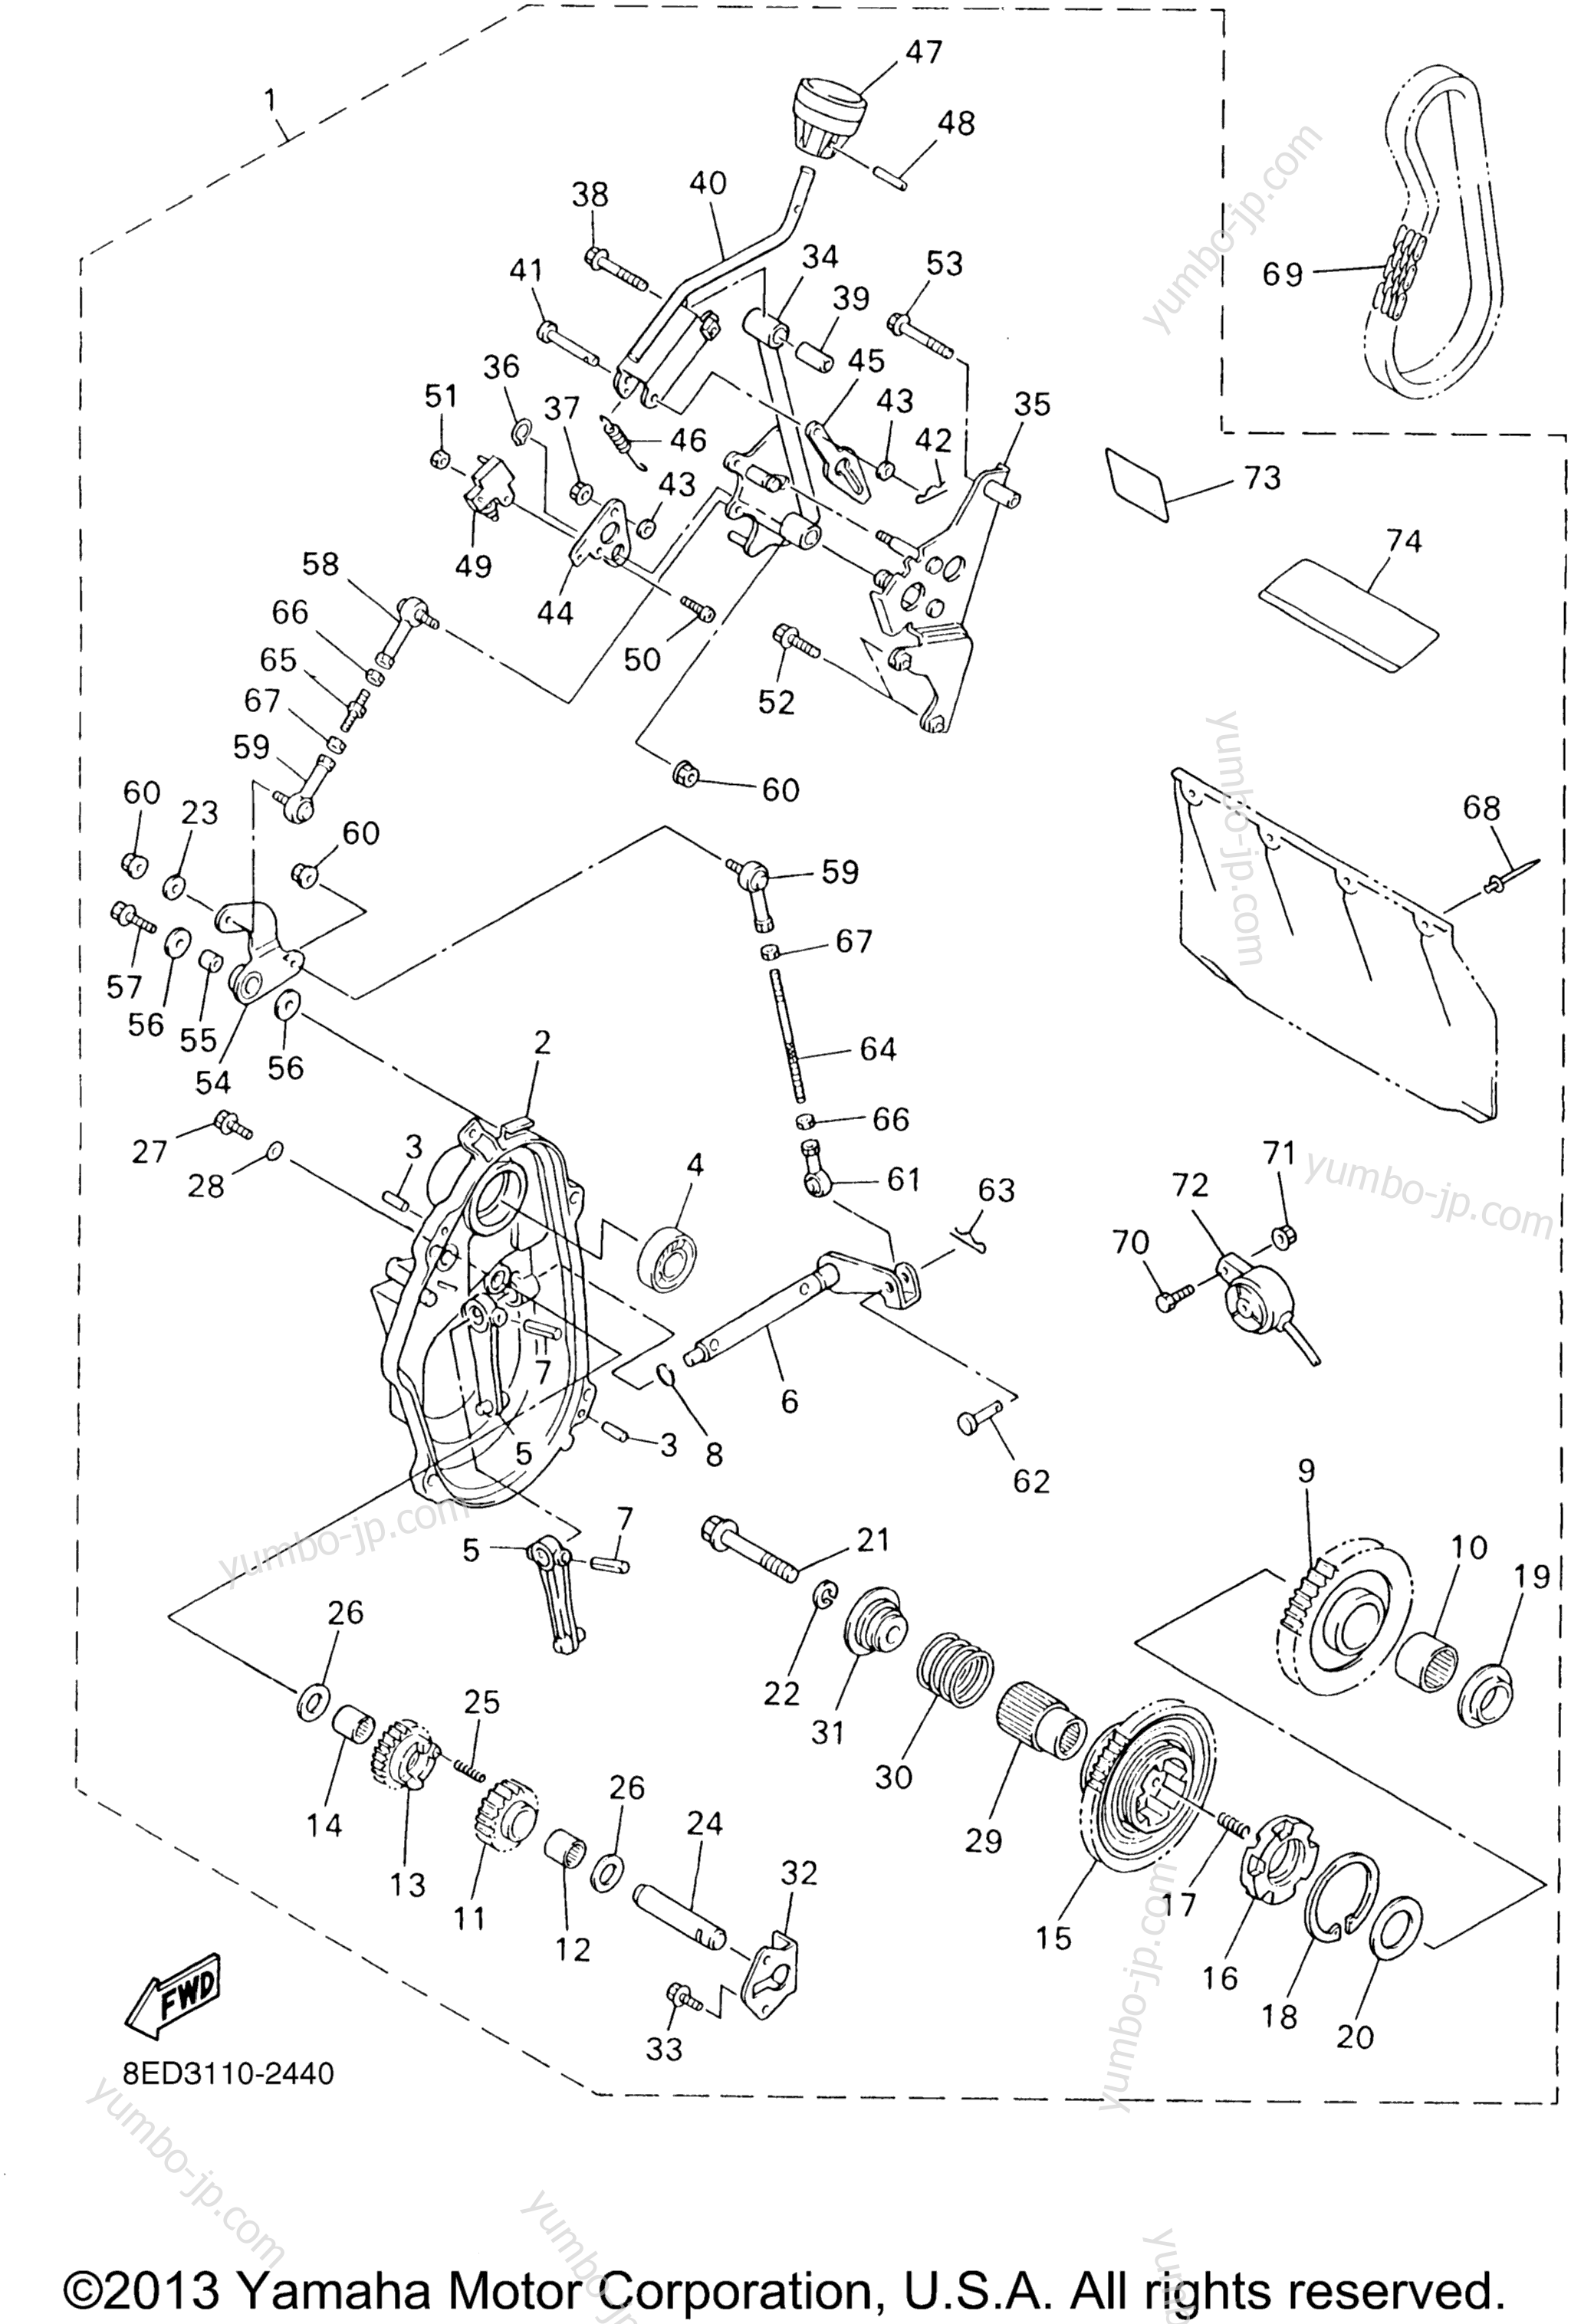 Alternate Reverse Gear Kit для снегоходов YAMAHA MOUNTAIN-MAX (MM700H) 2003 г.